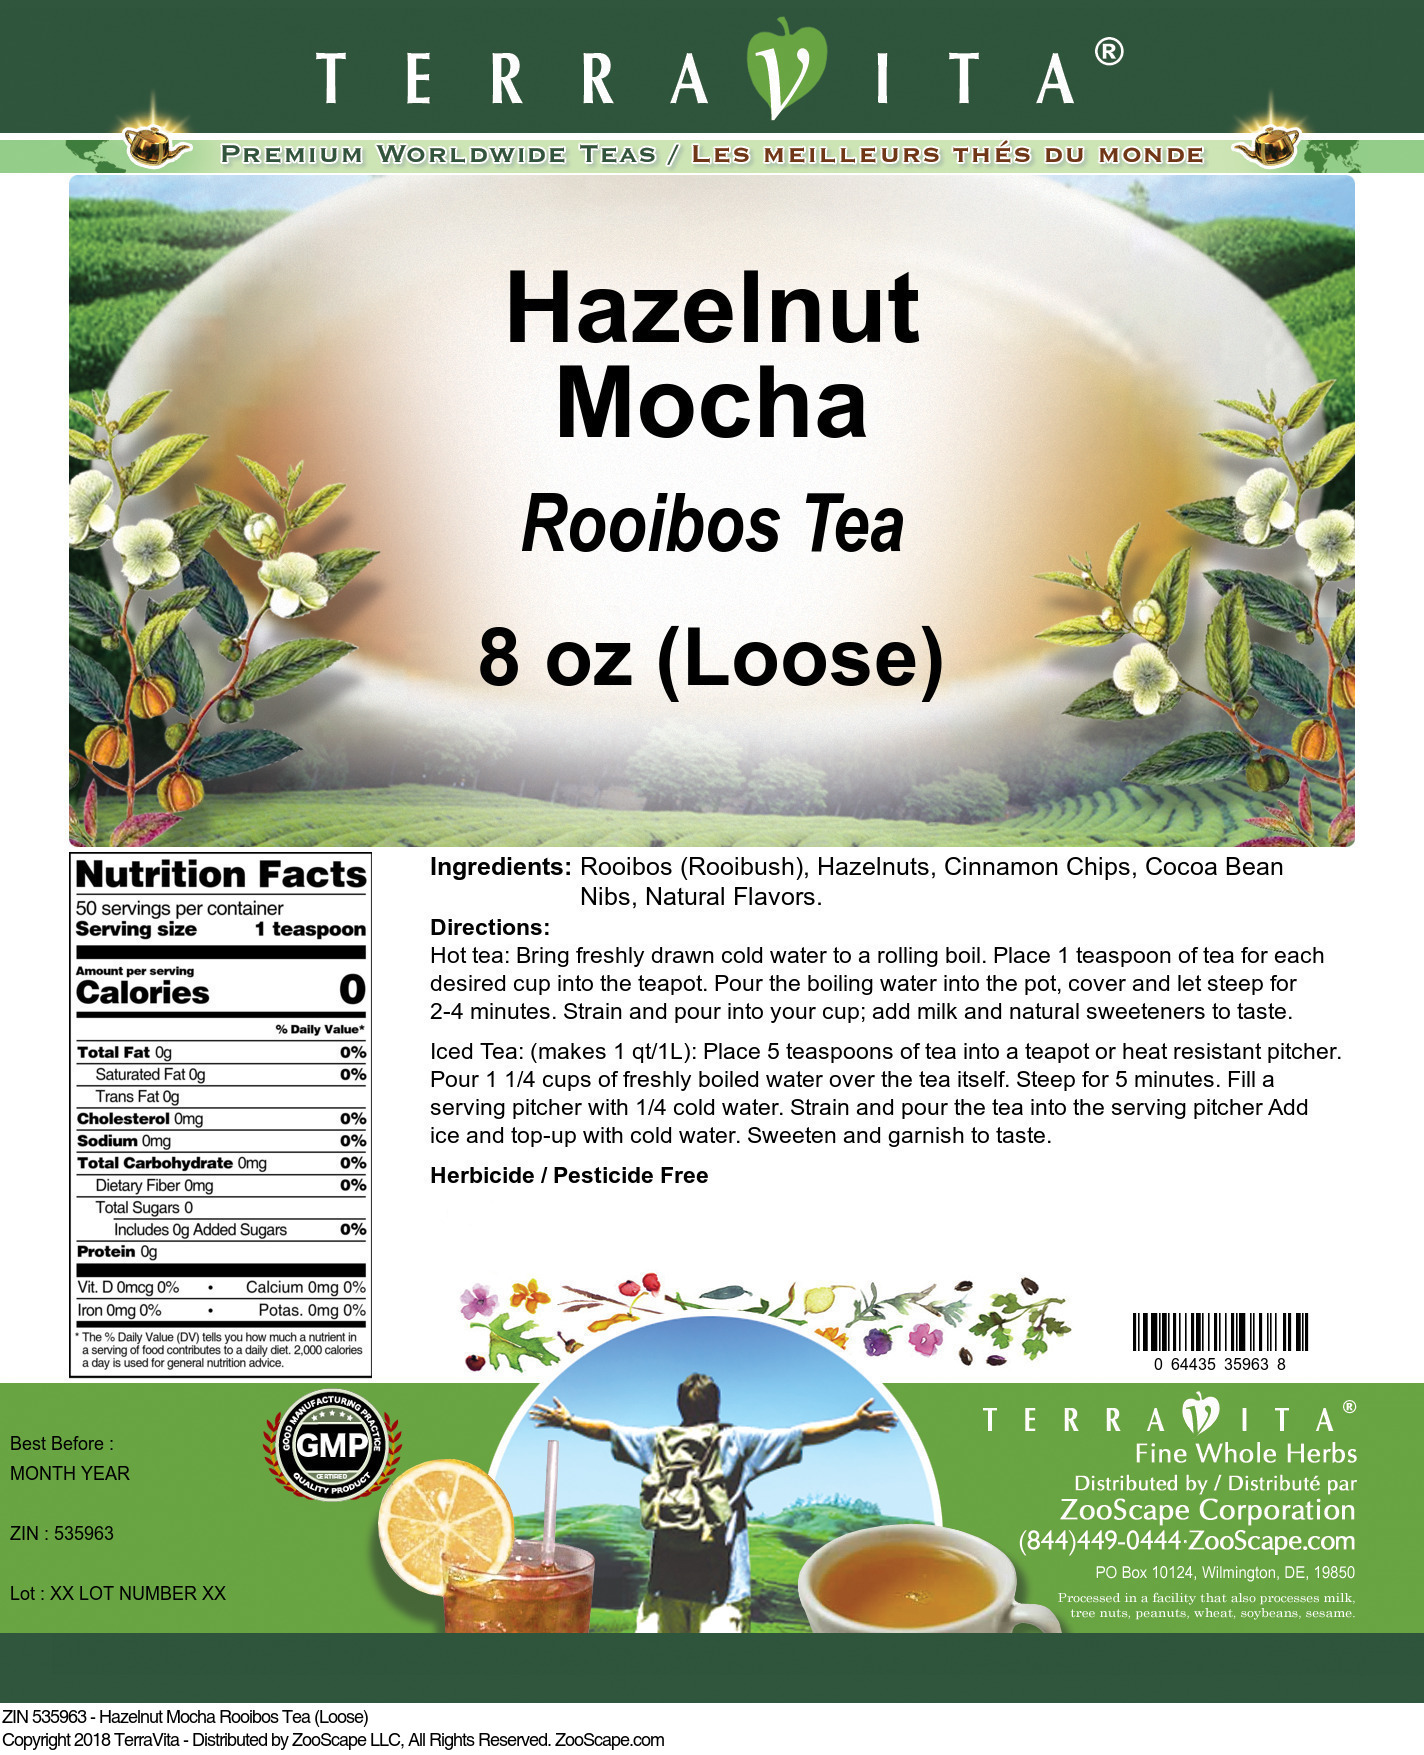 Hazelnut Mocha Rooibos Tea (Loose) - Label